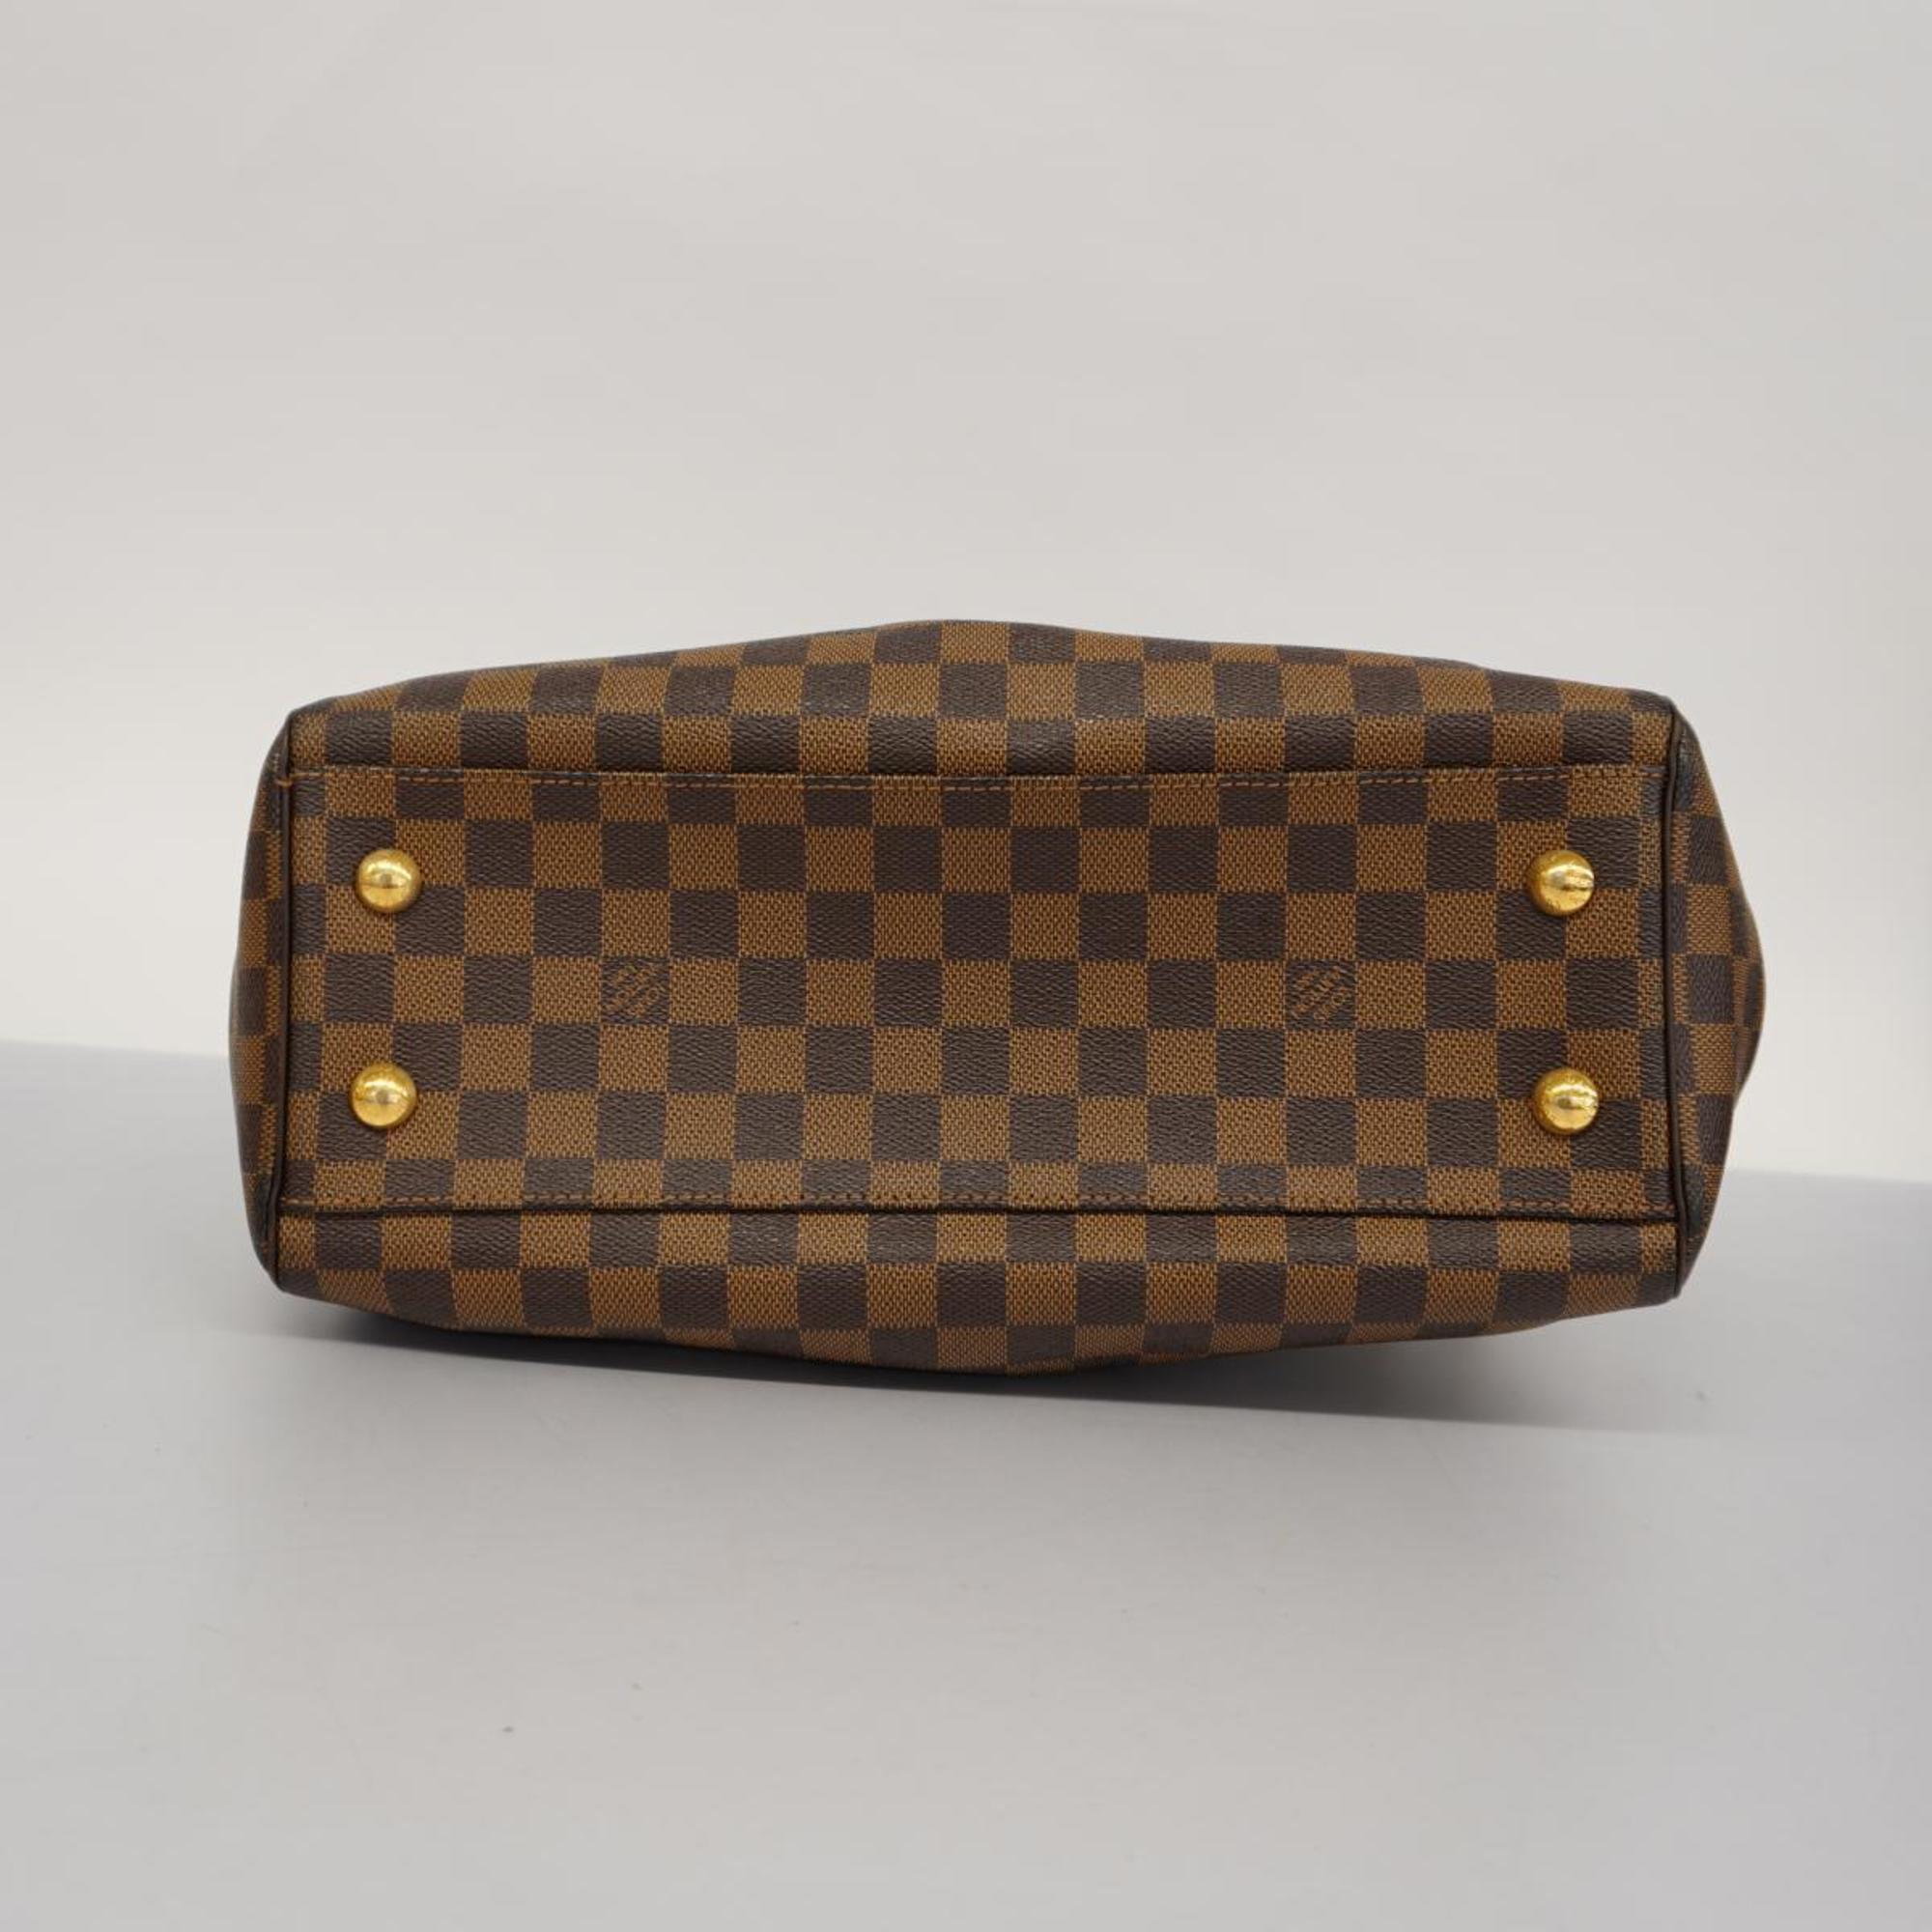 Louis Vuitton Handbag Damier Trevi PM N51997 Ebene Ladies